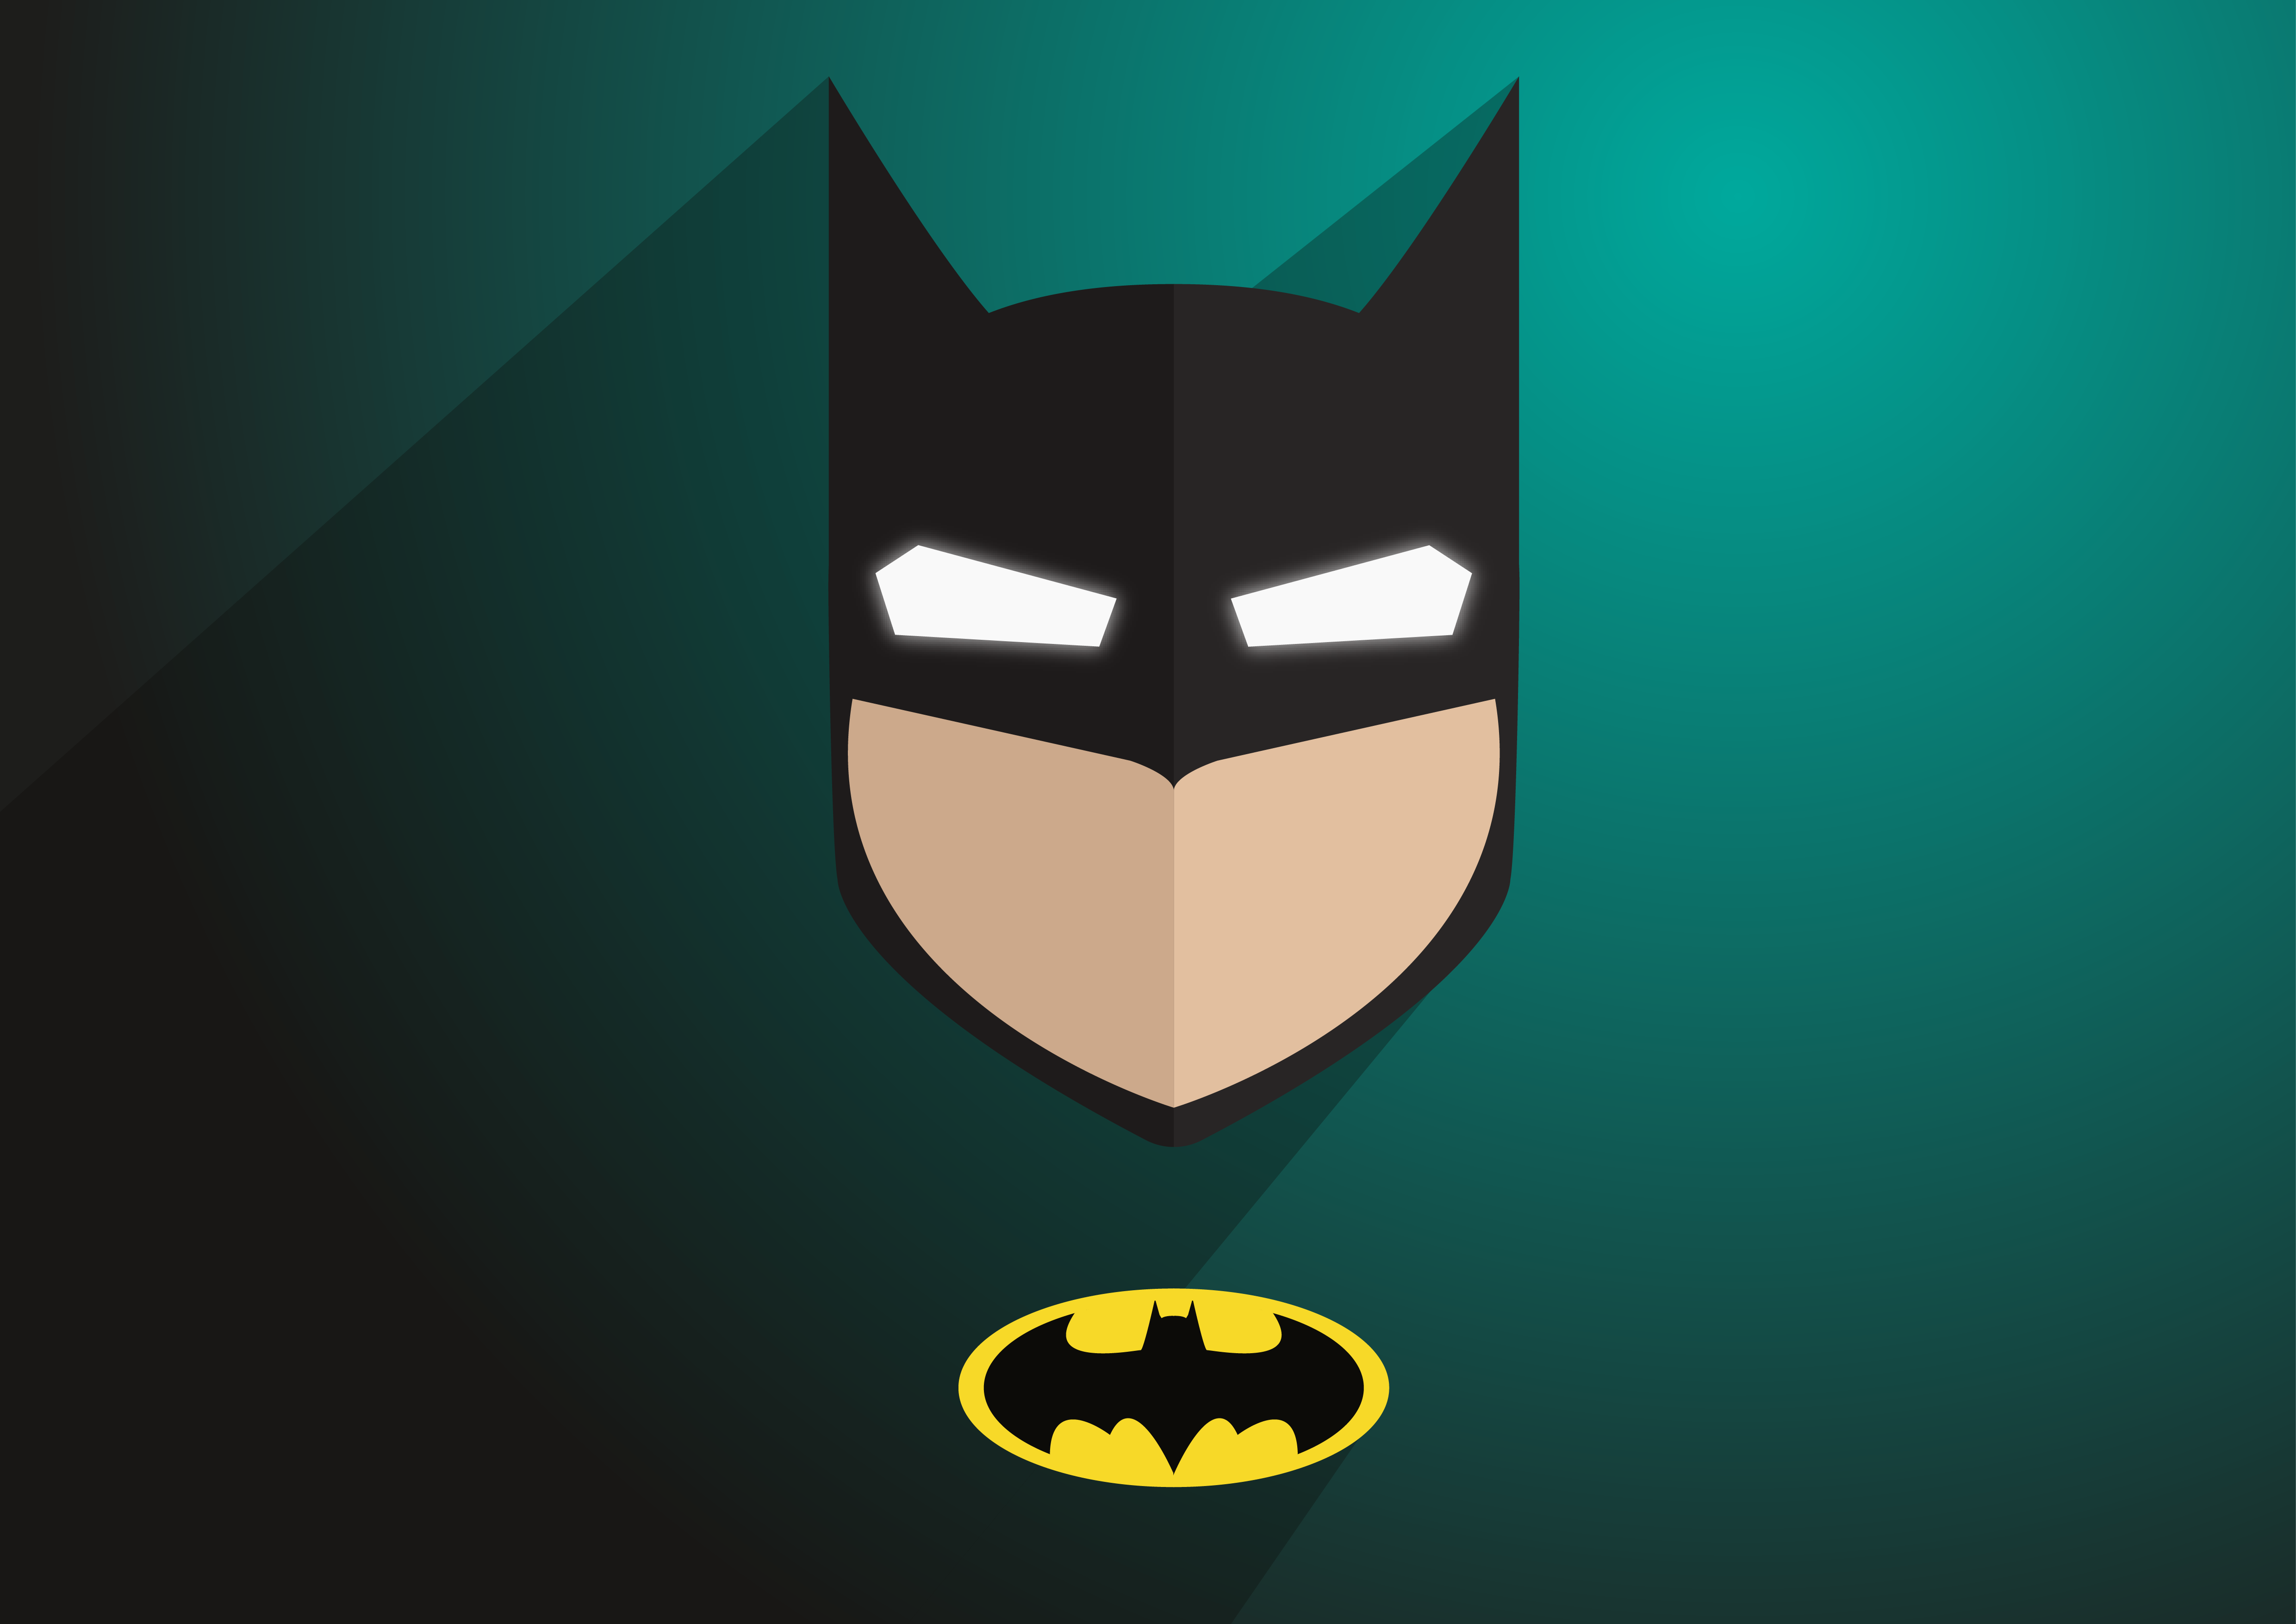 General 4961x3508 Batman logo minimalism glowing eyes mask teal green superhero digital art